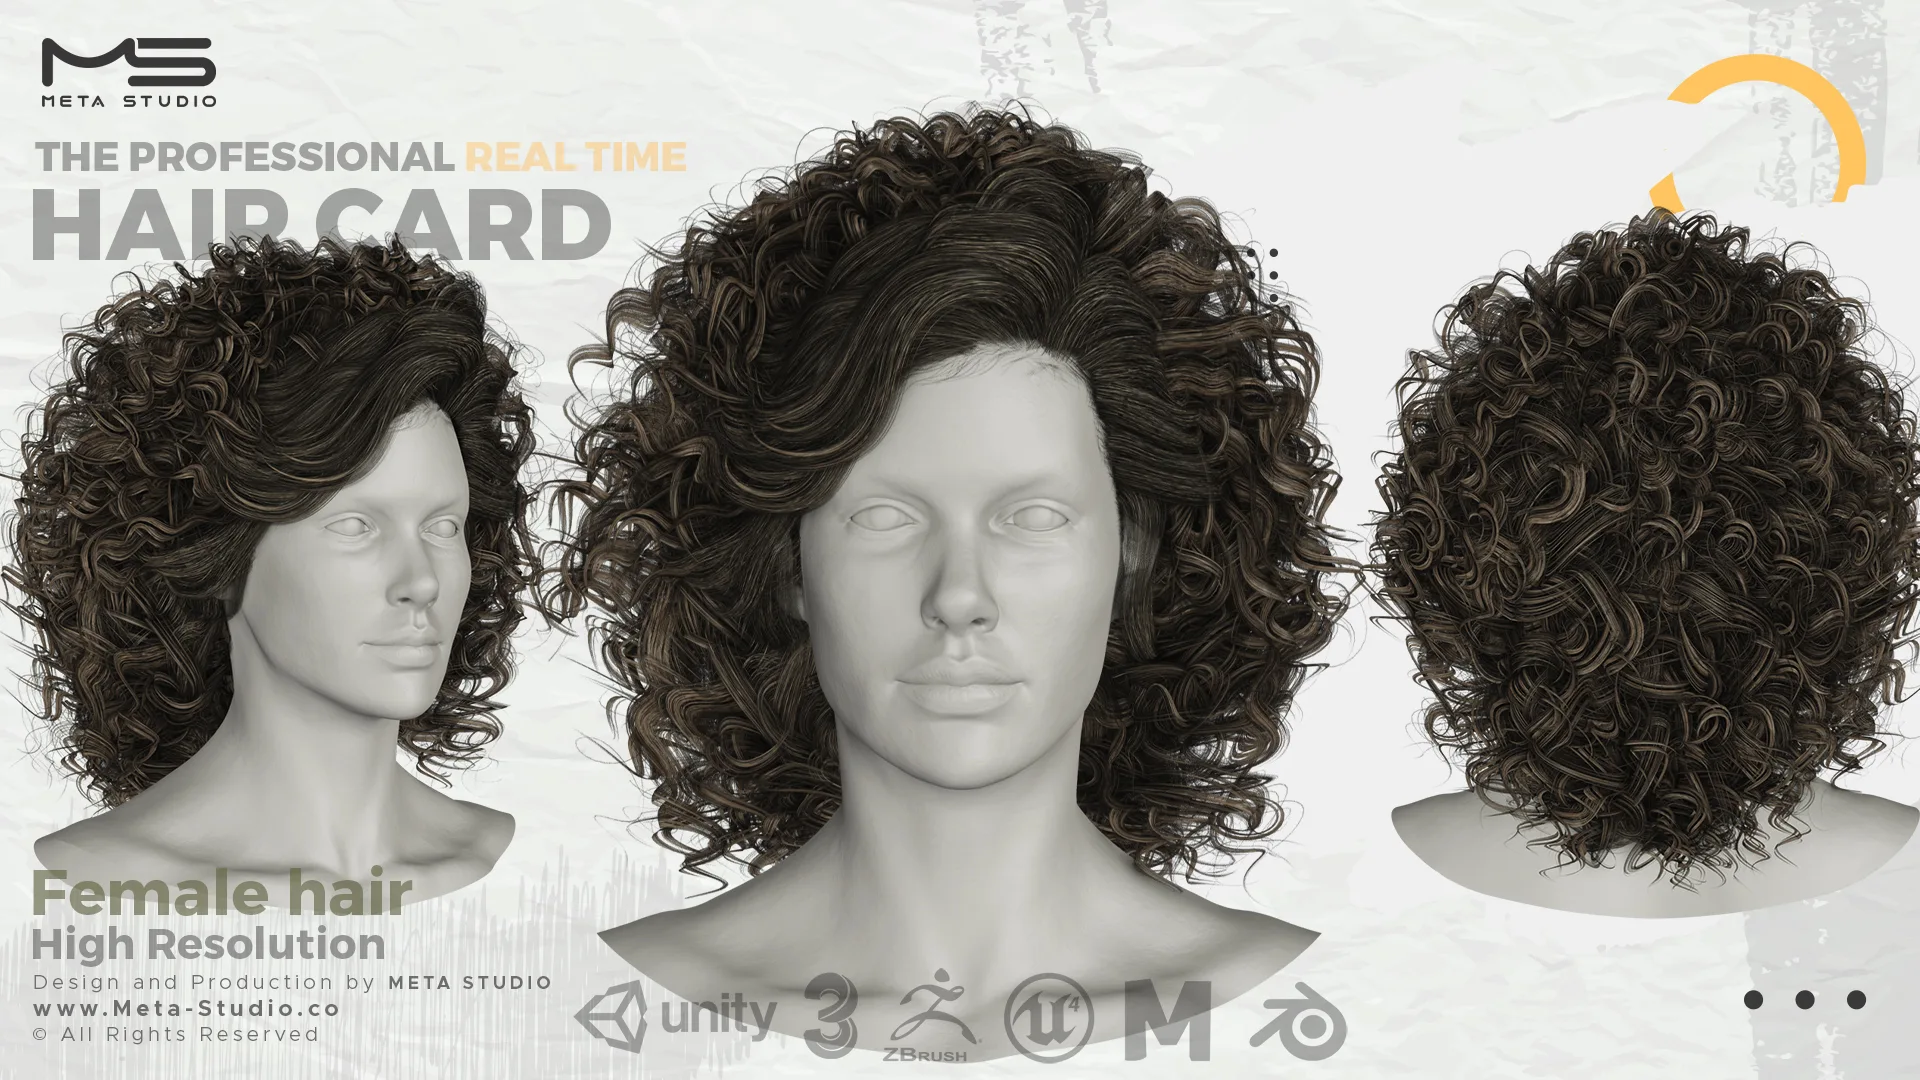 Female Hair Part 1 - Professional Realtime Hair card